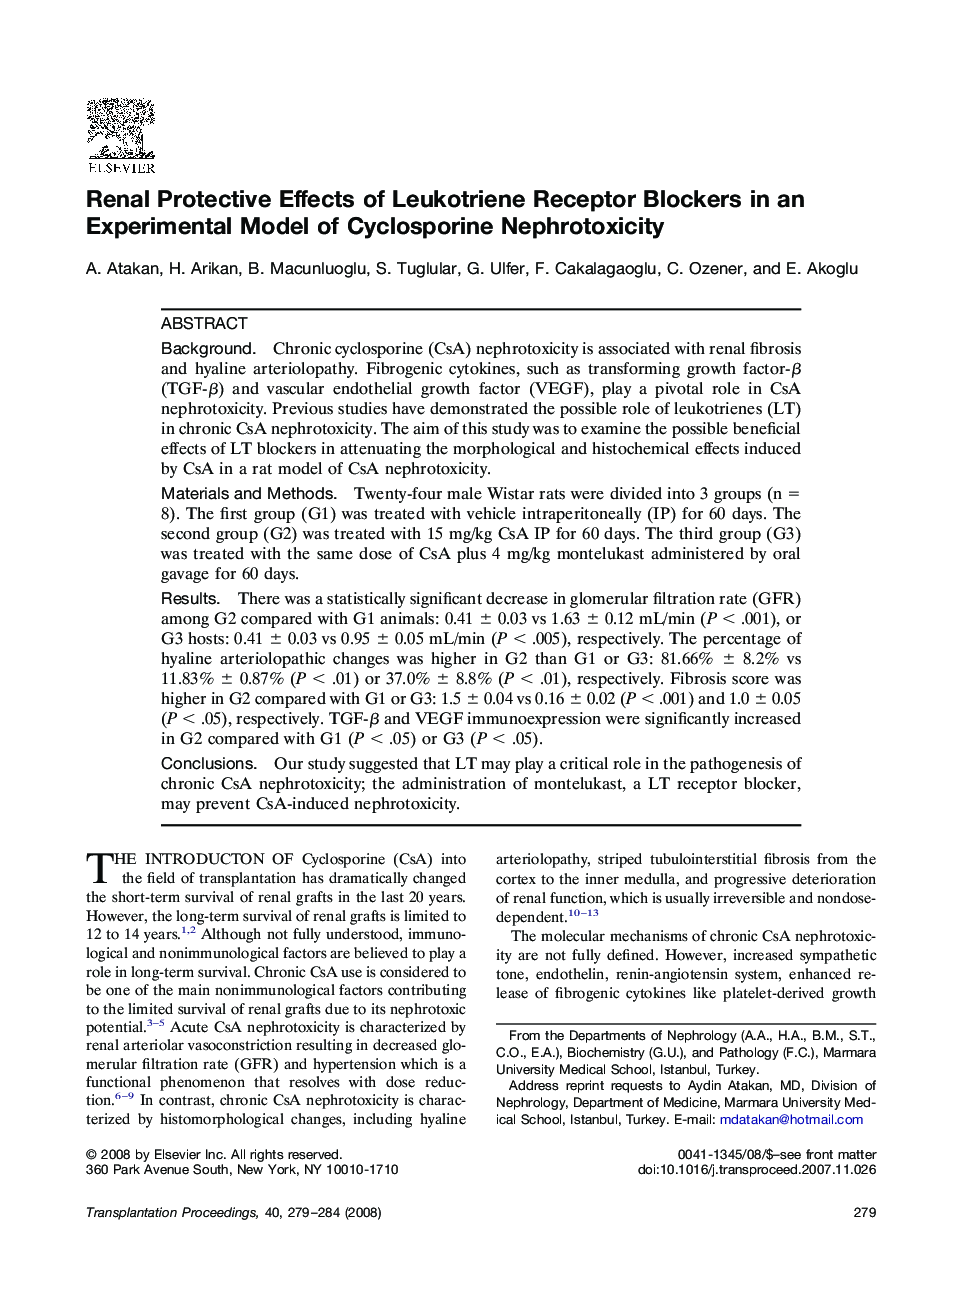 Renal Protective Effects of Leukotriene Receptor Blockers in an Experimental Model of Cyclosporine Nephrotoxicity